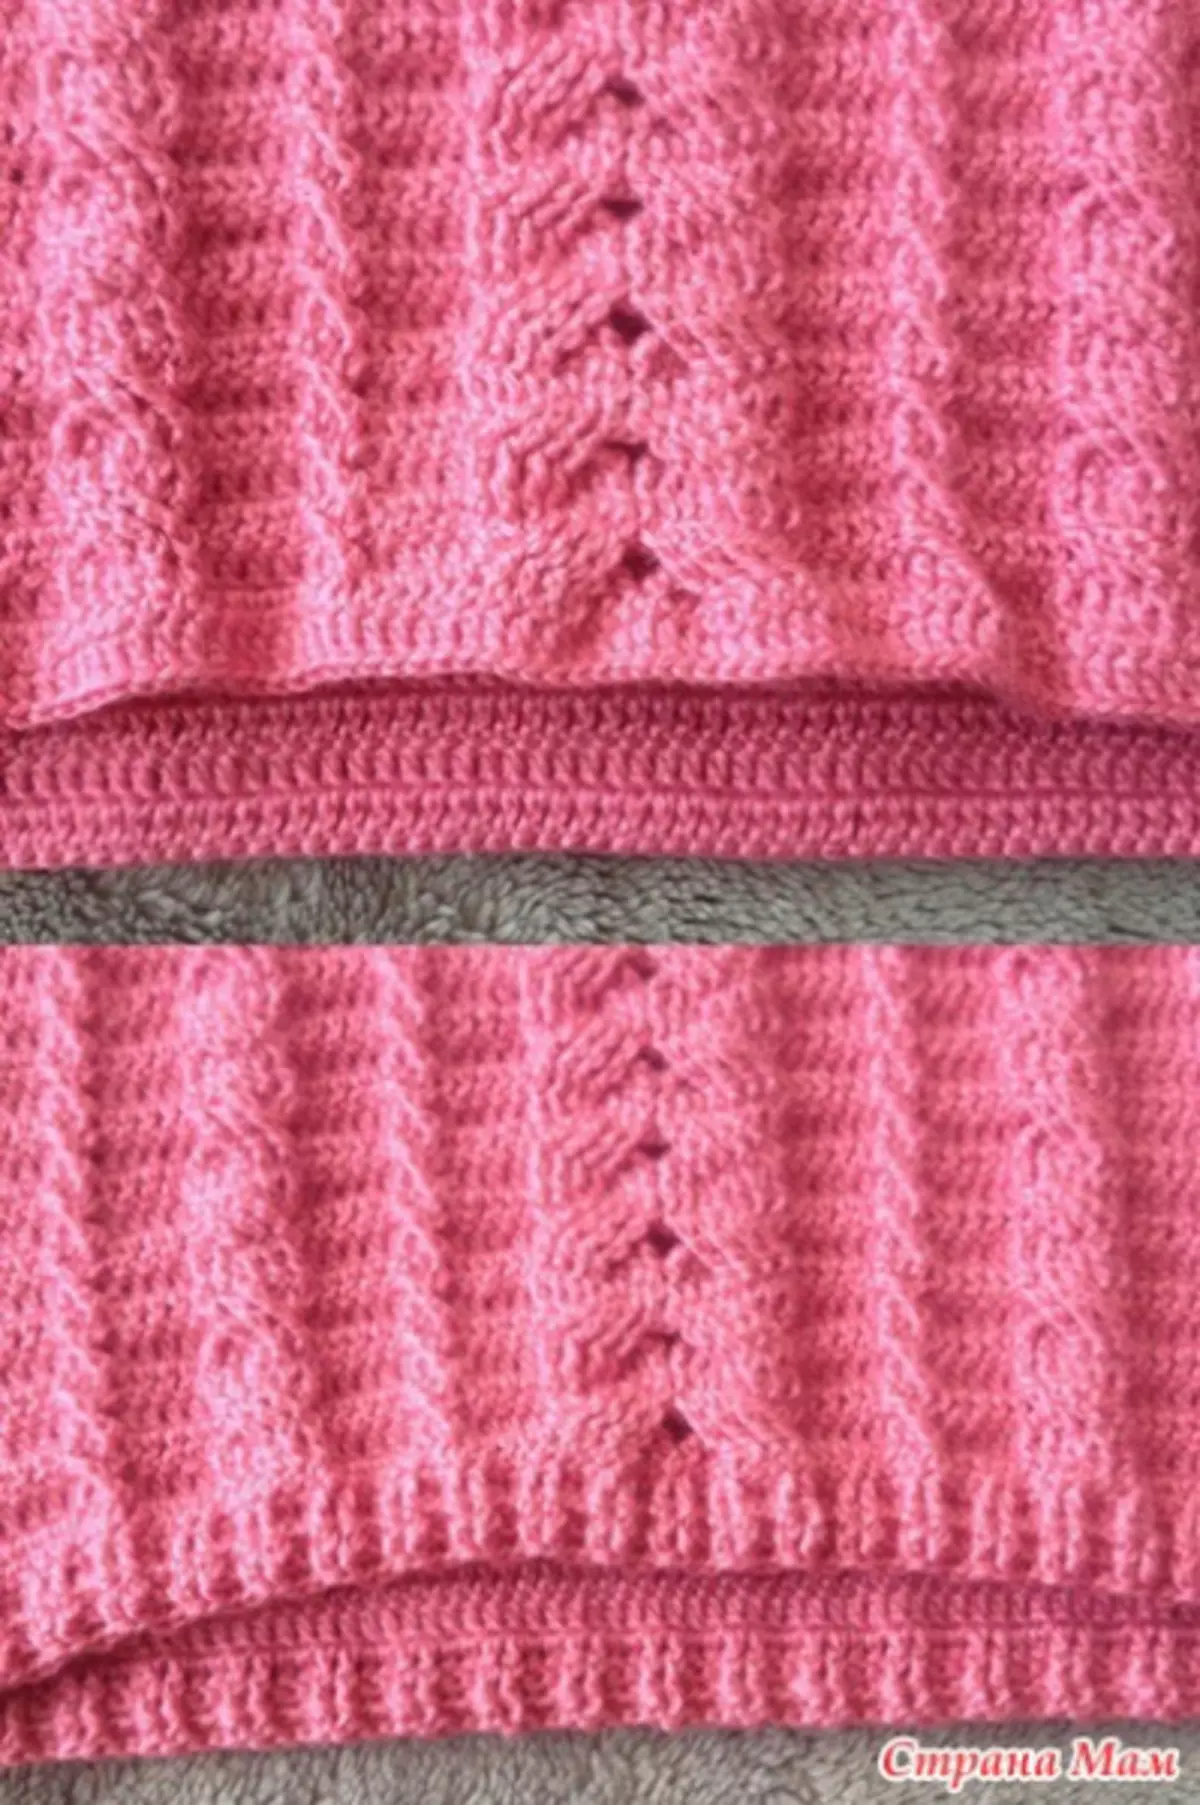 Crochet سویٹر: ویڈیو کے ساتھ beginners کے لئے منصوبہ بندی اور وضاحت